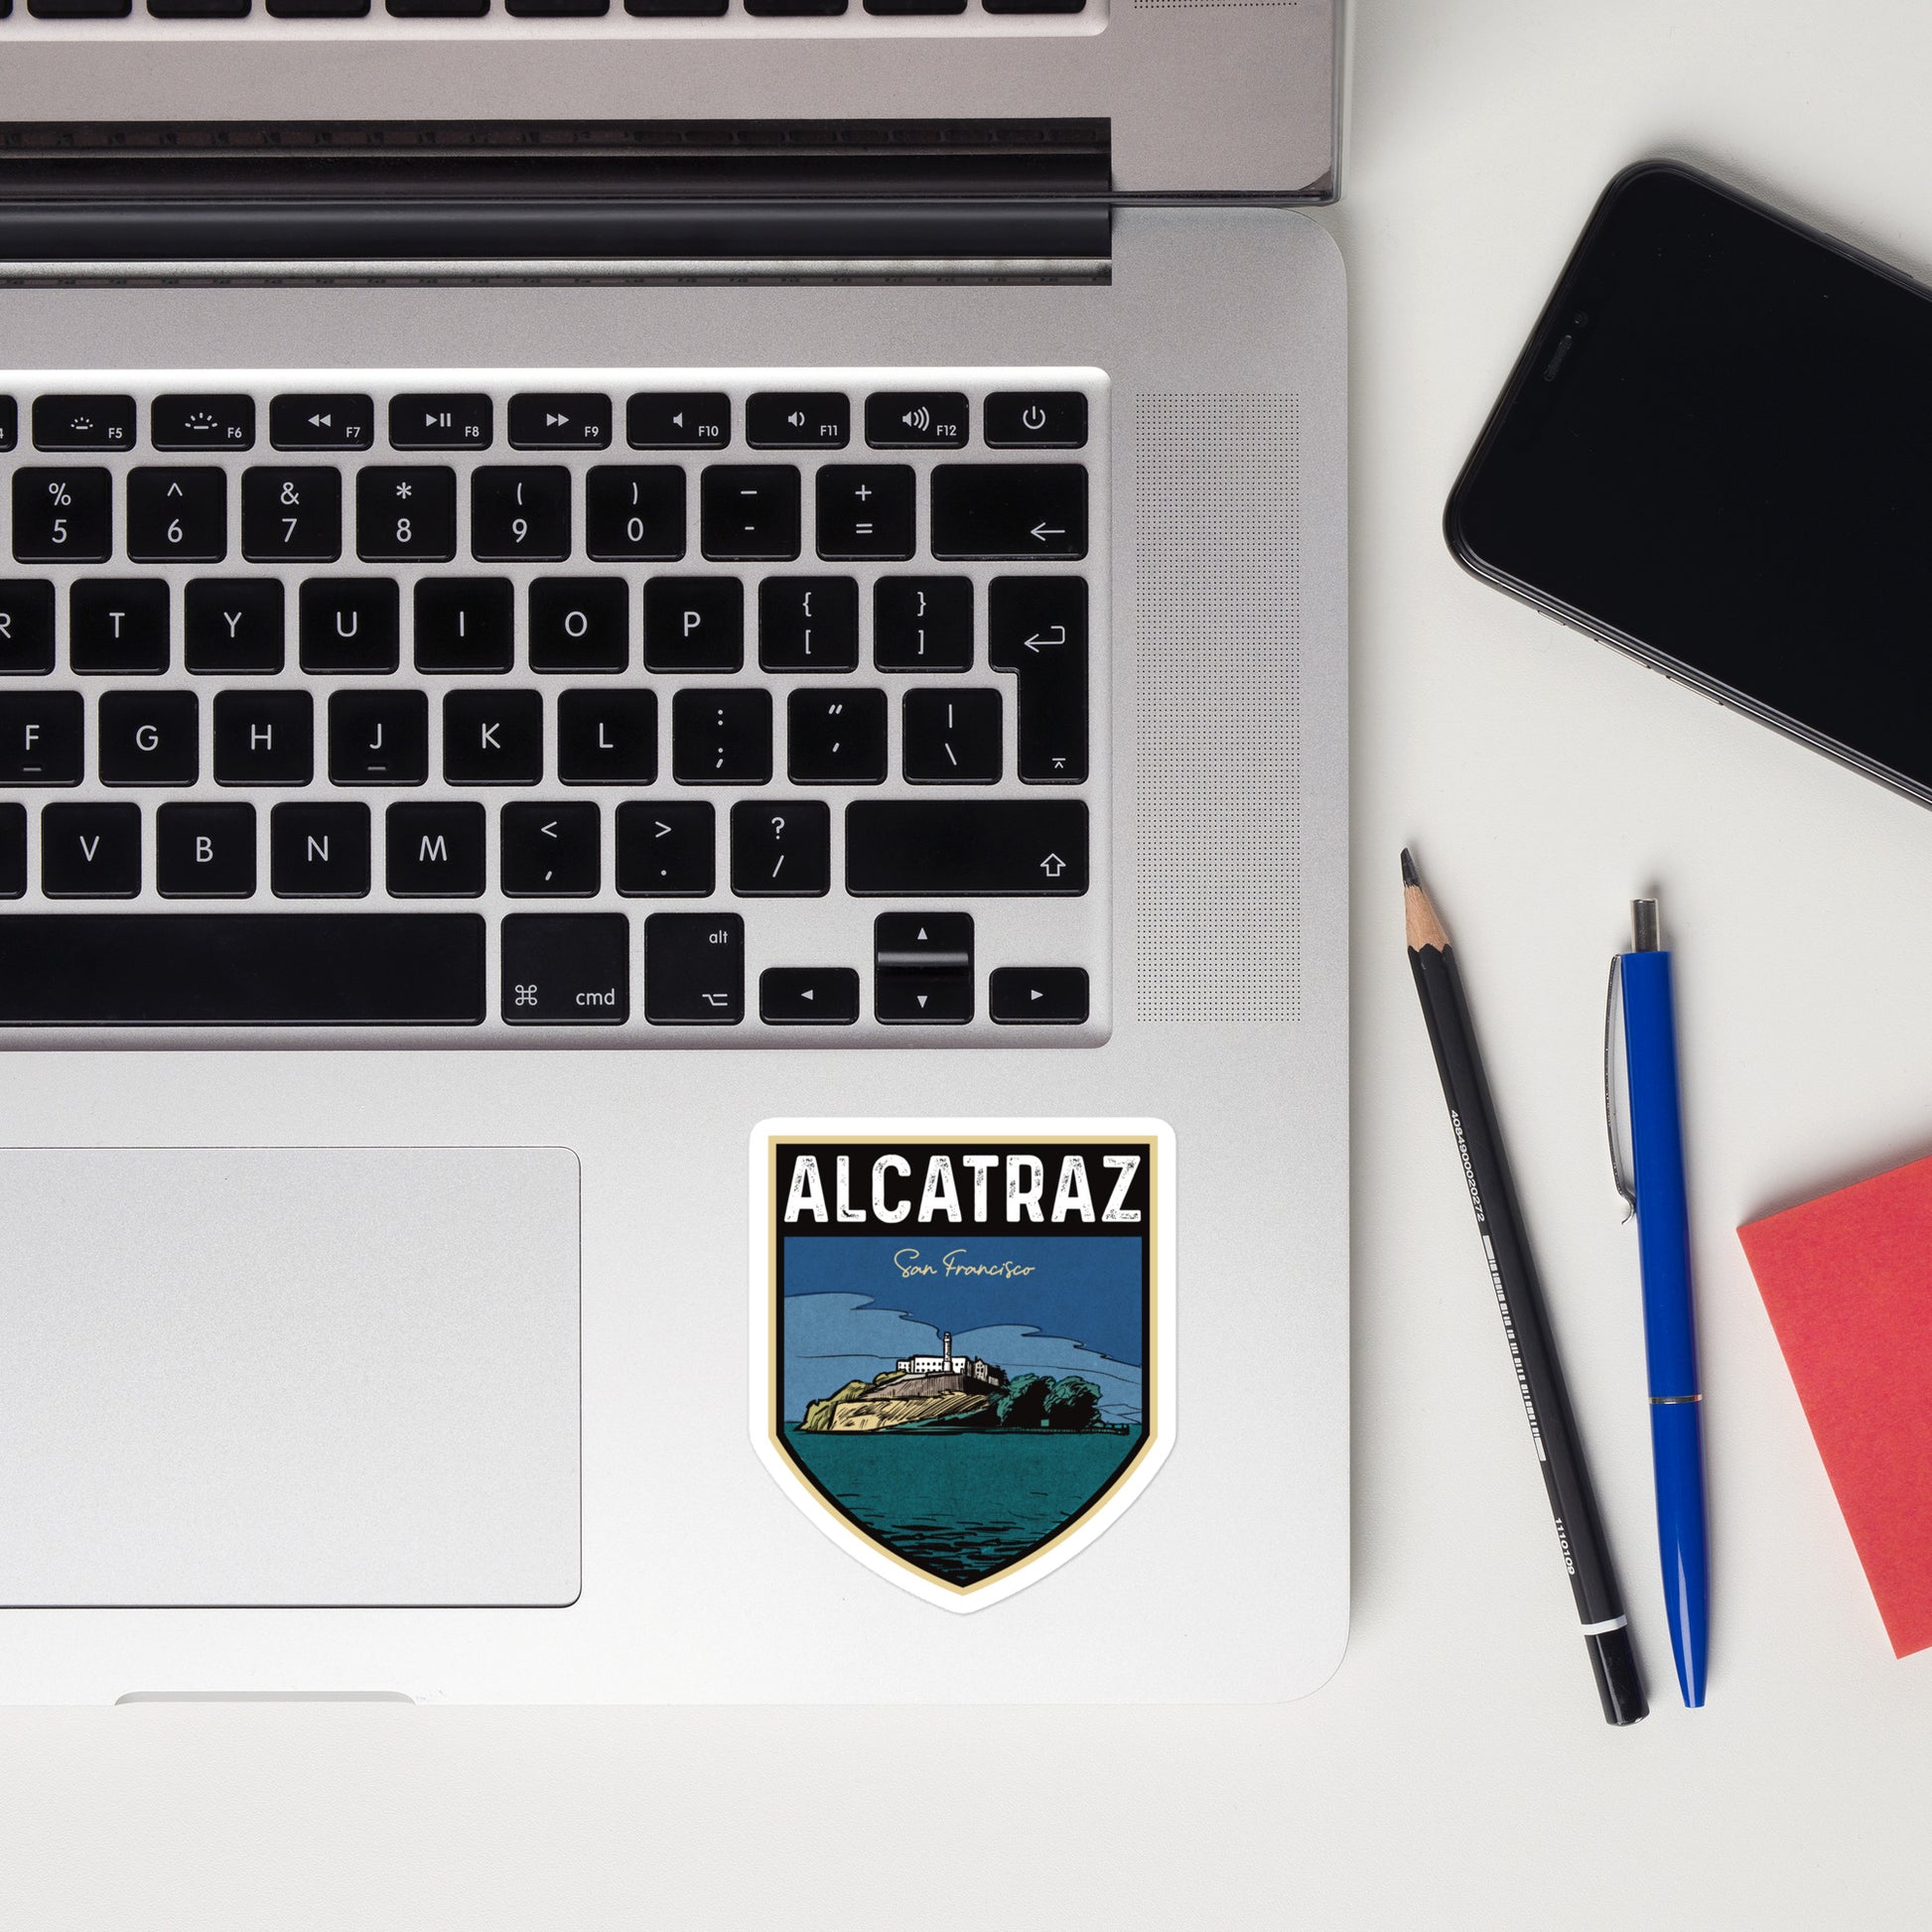 A sticker of Alcatraz California on a laptop